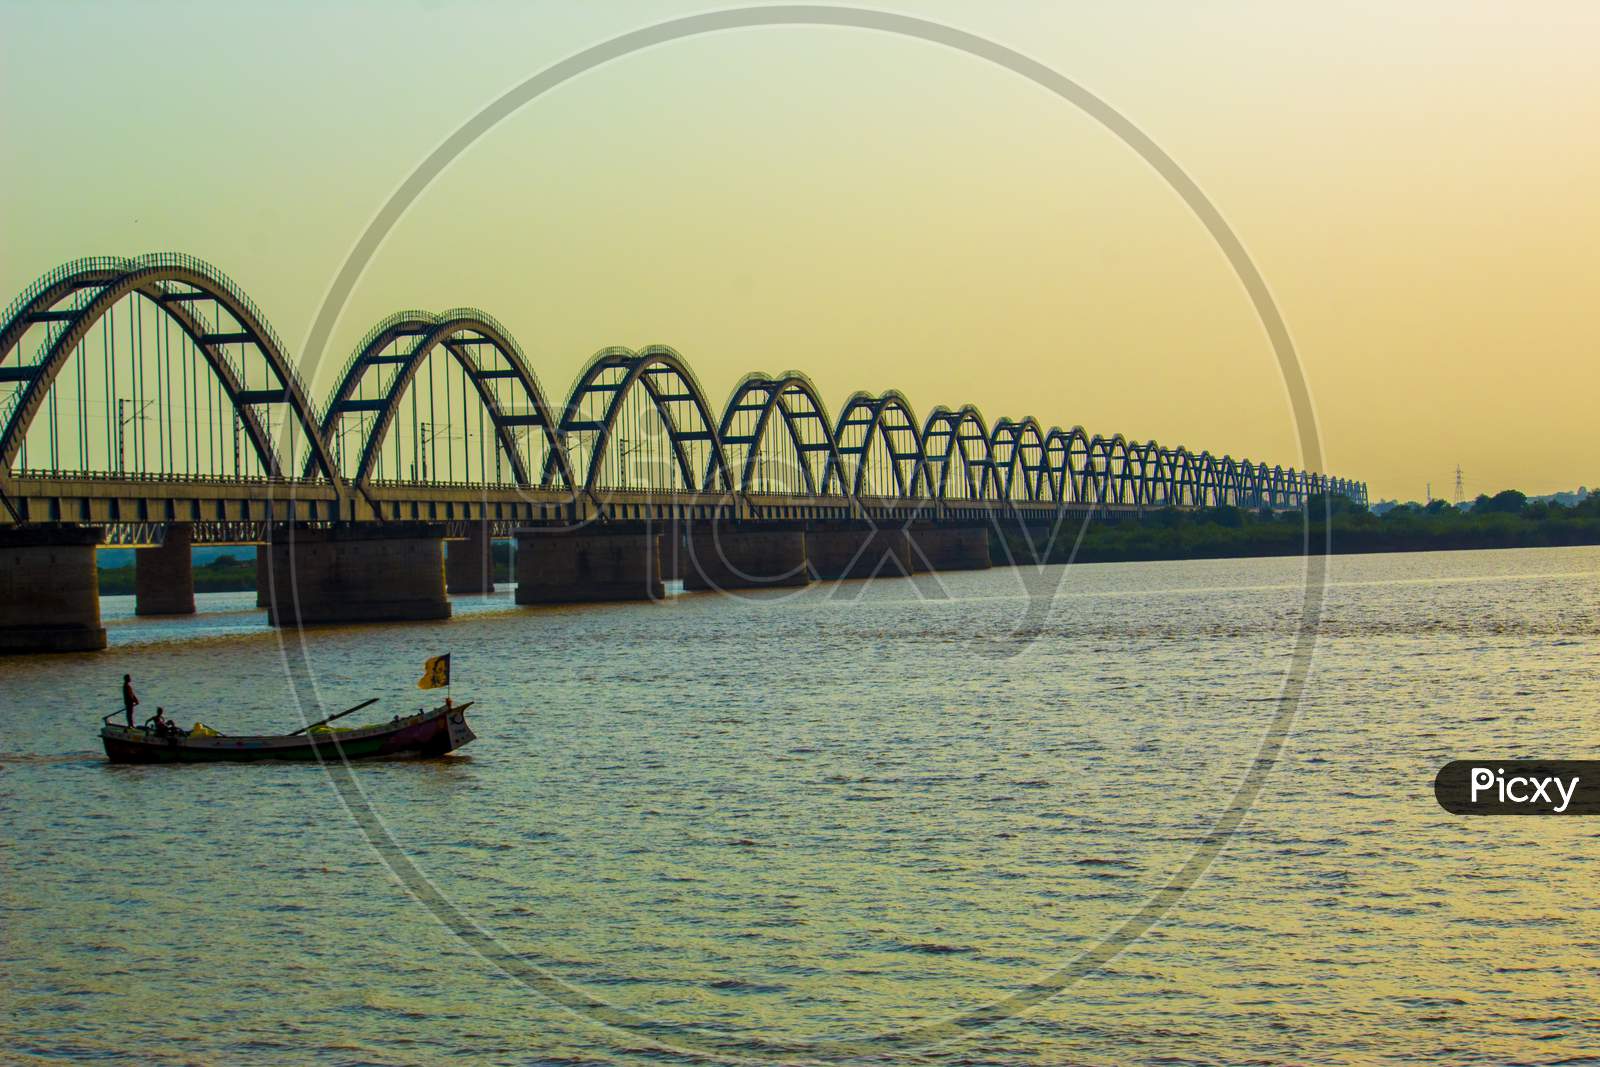 Rajahmundry Arch Bridge  Over Godavari River